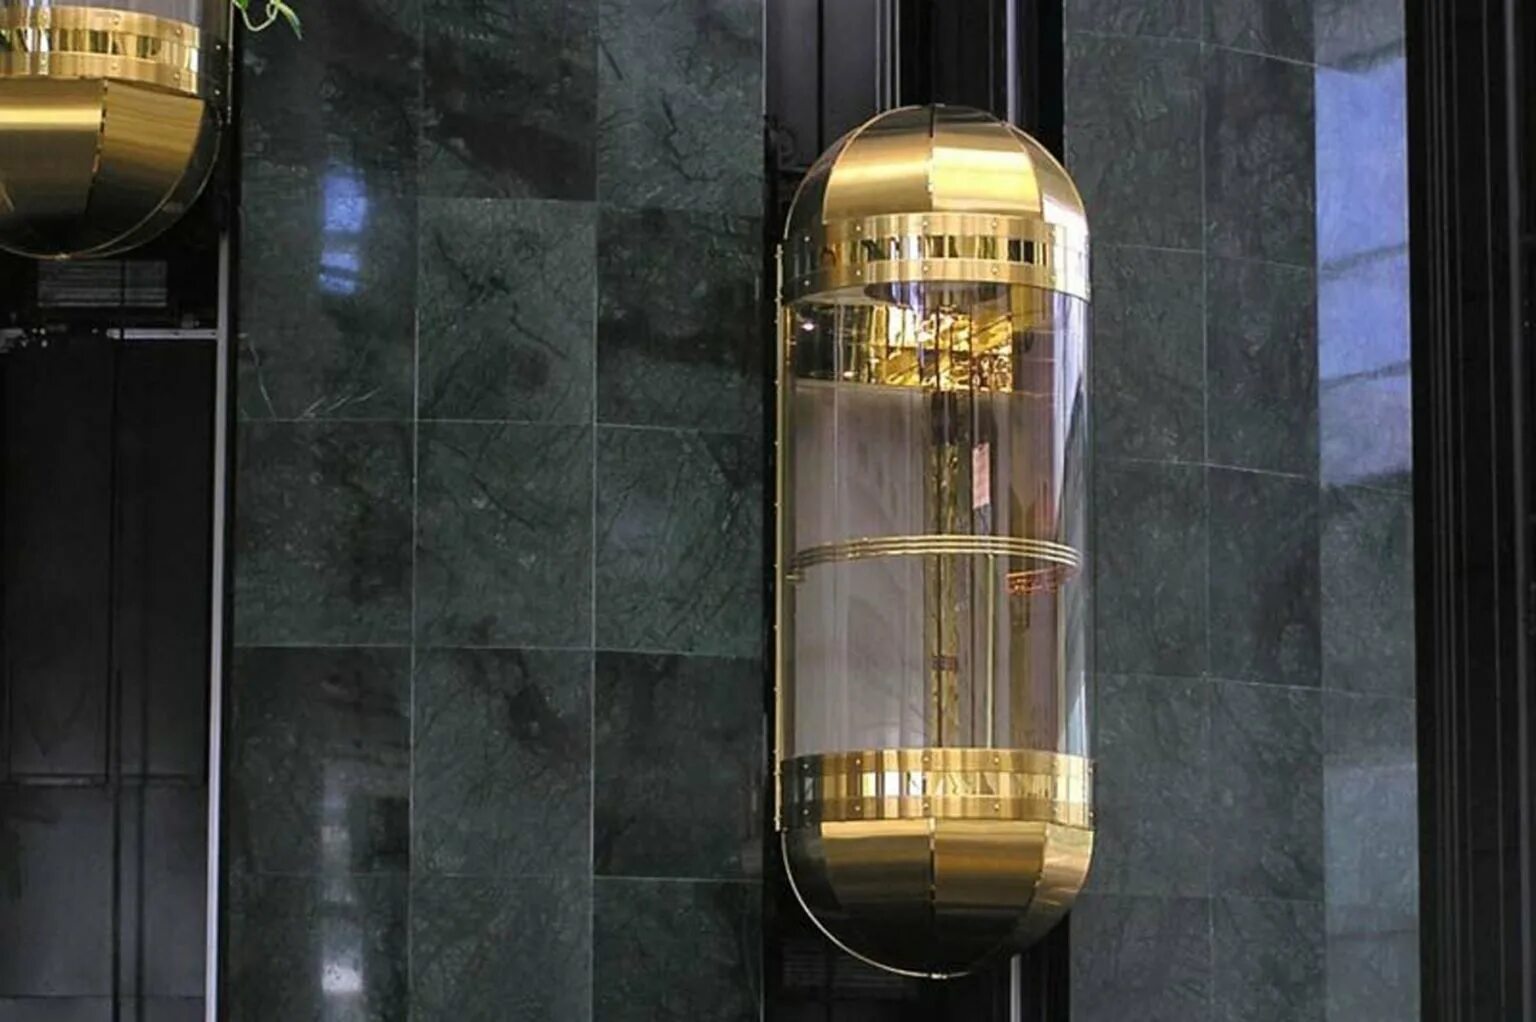 Fuji Elevator лифт. Стеклянный лифт. Панорамный лифт в интерьере. Панорамный лифт капсульный.